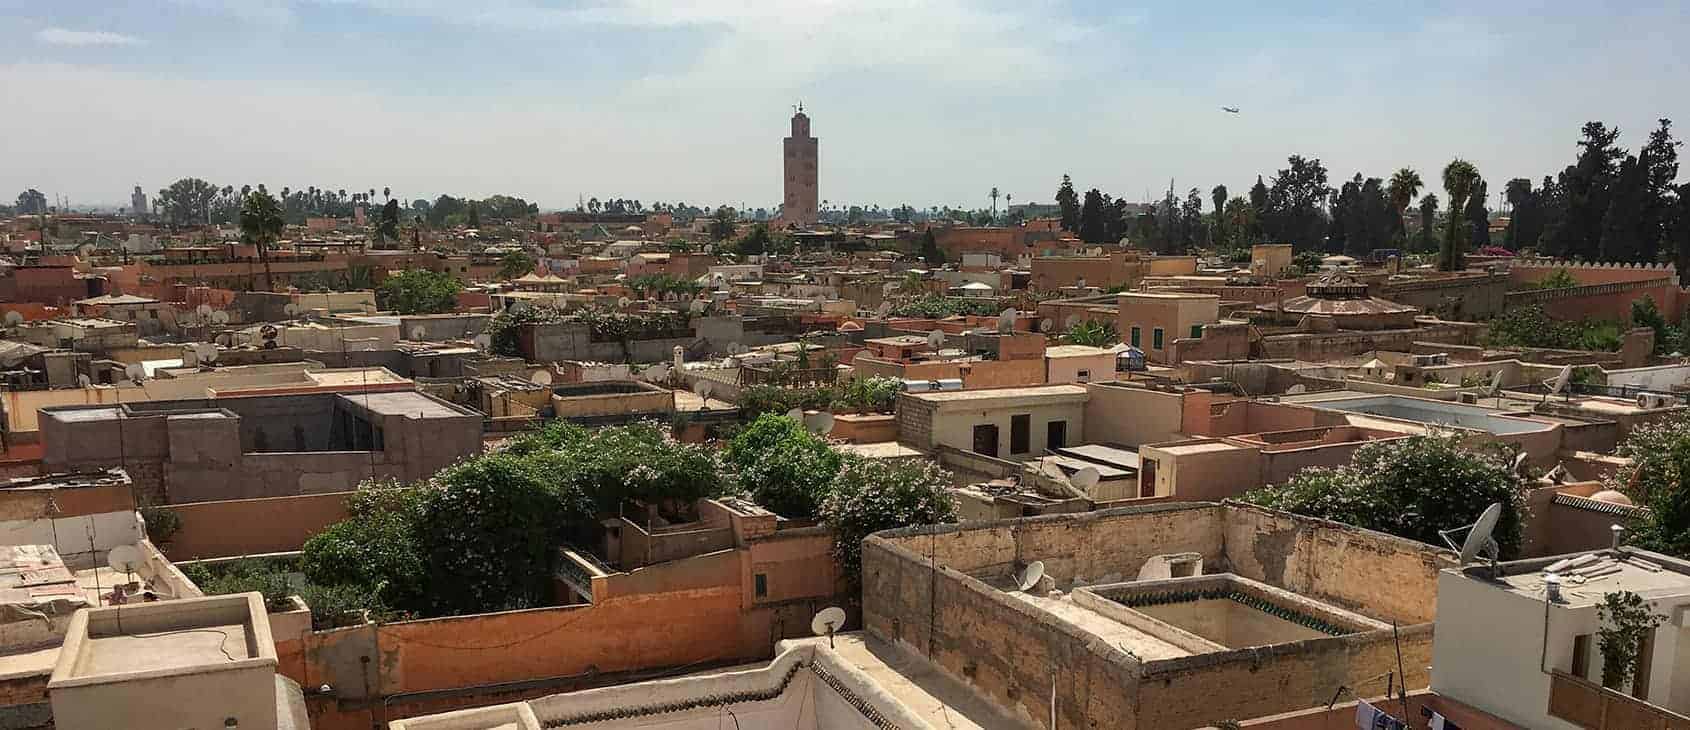 Rooftops of Marrakech medina